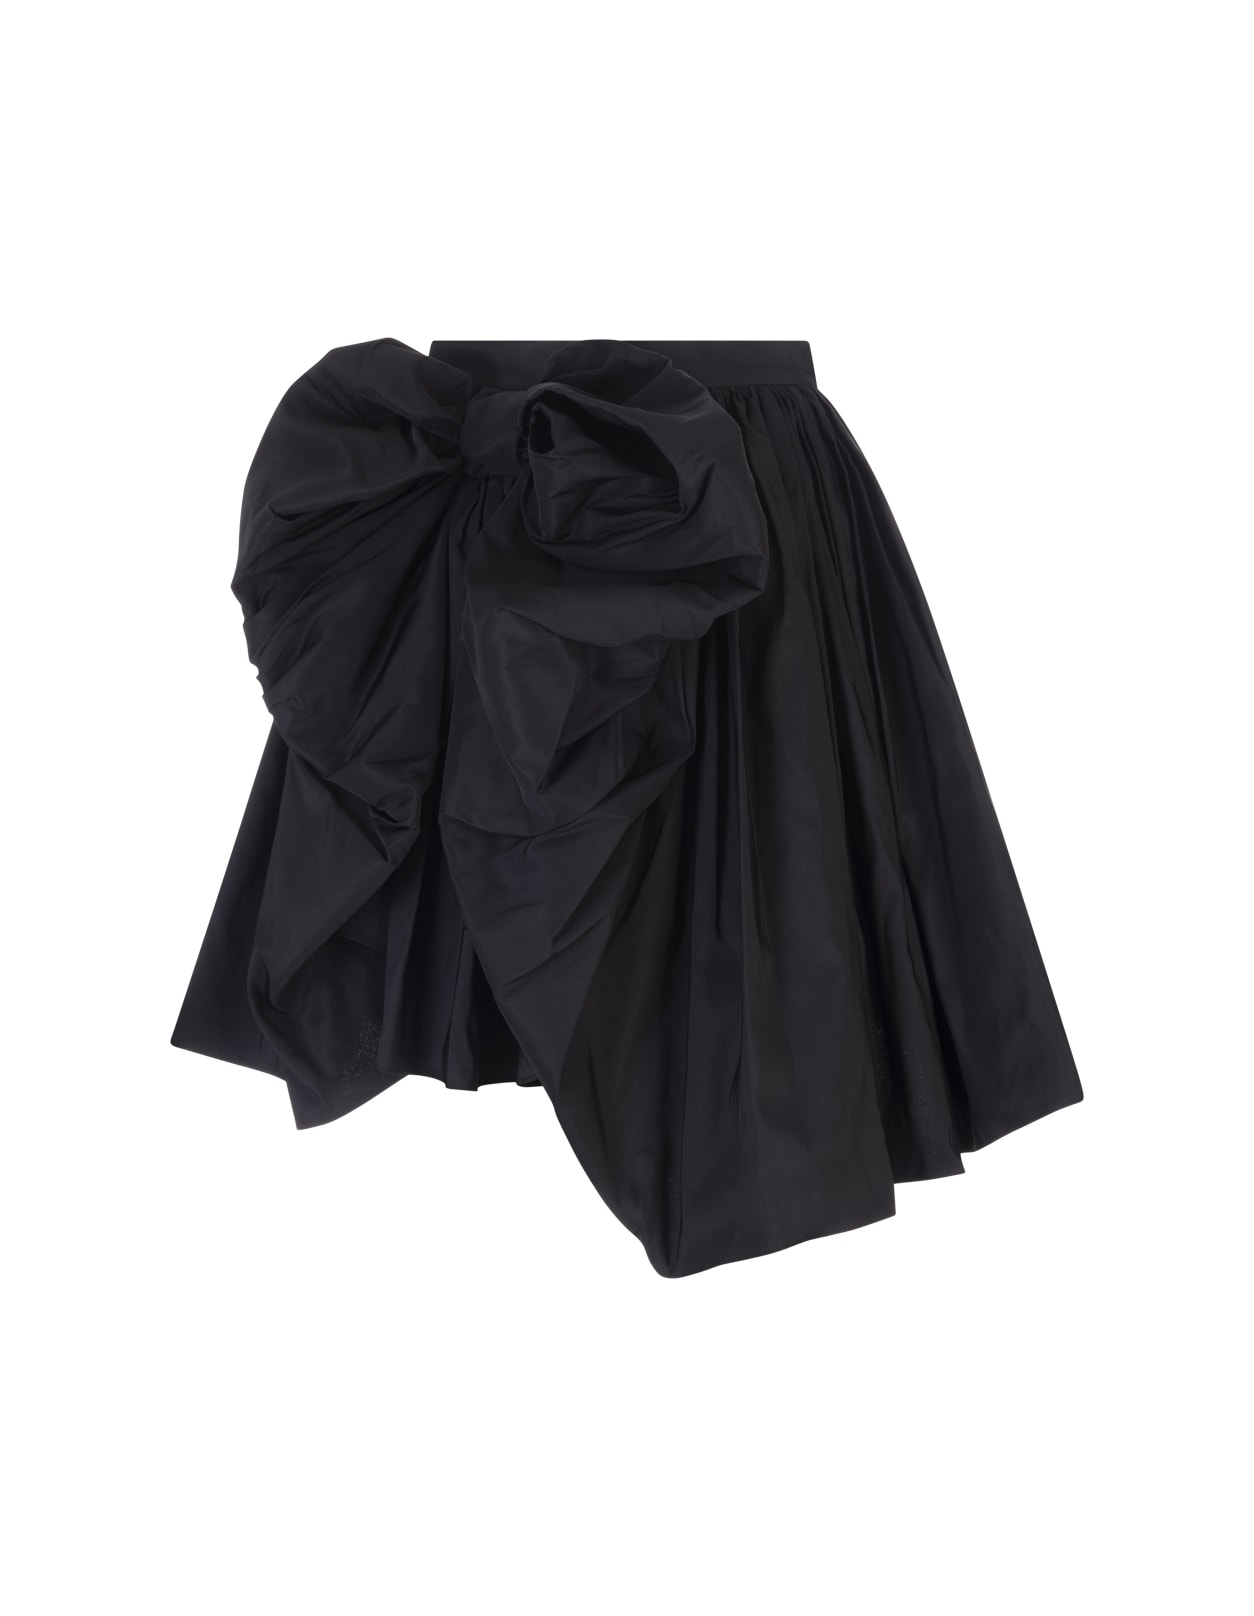 Alexander McQueen Short Black Skirt With Bow